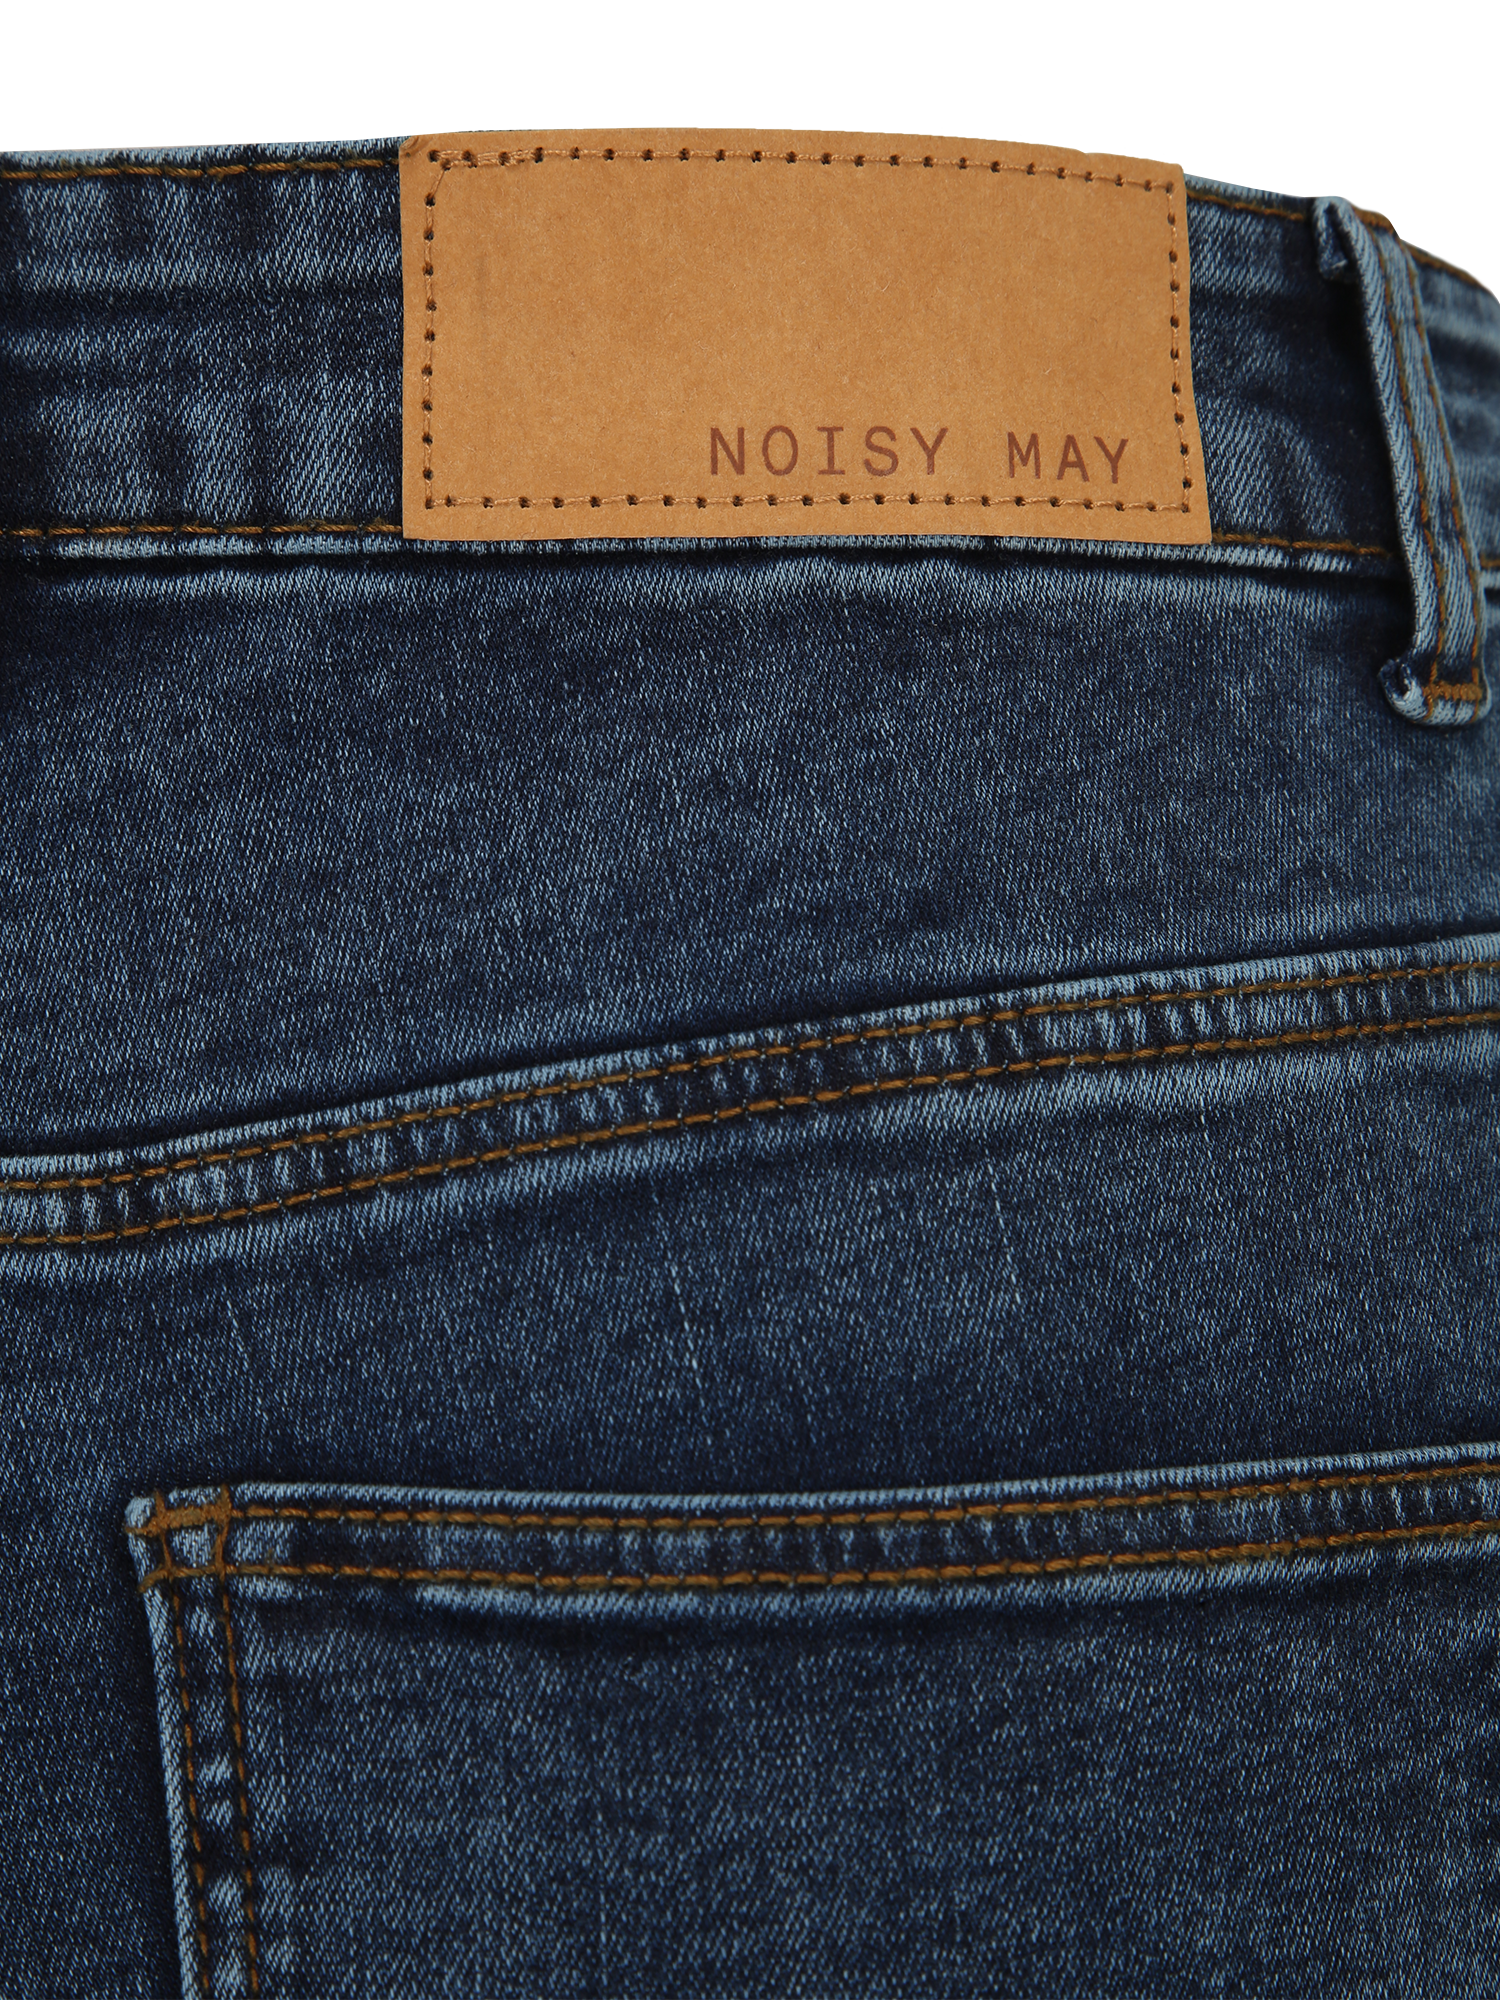 Noisy May Tall Jeans CALLIE in Dunkelblau 